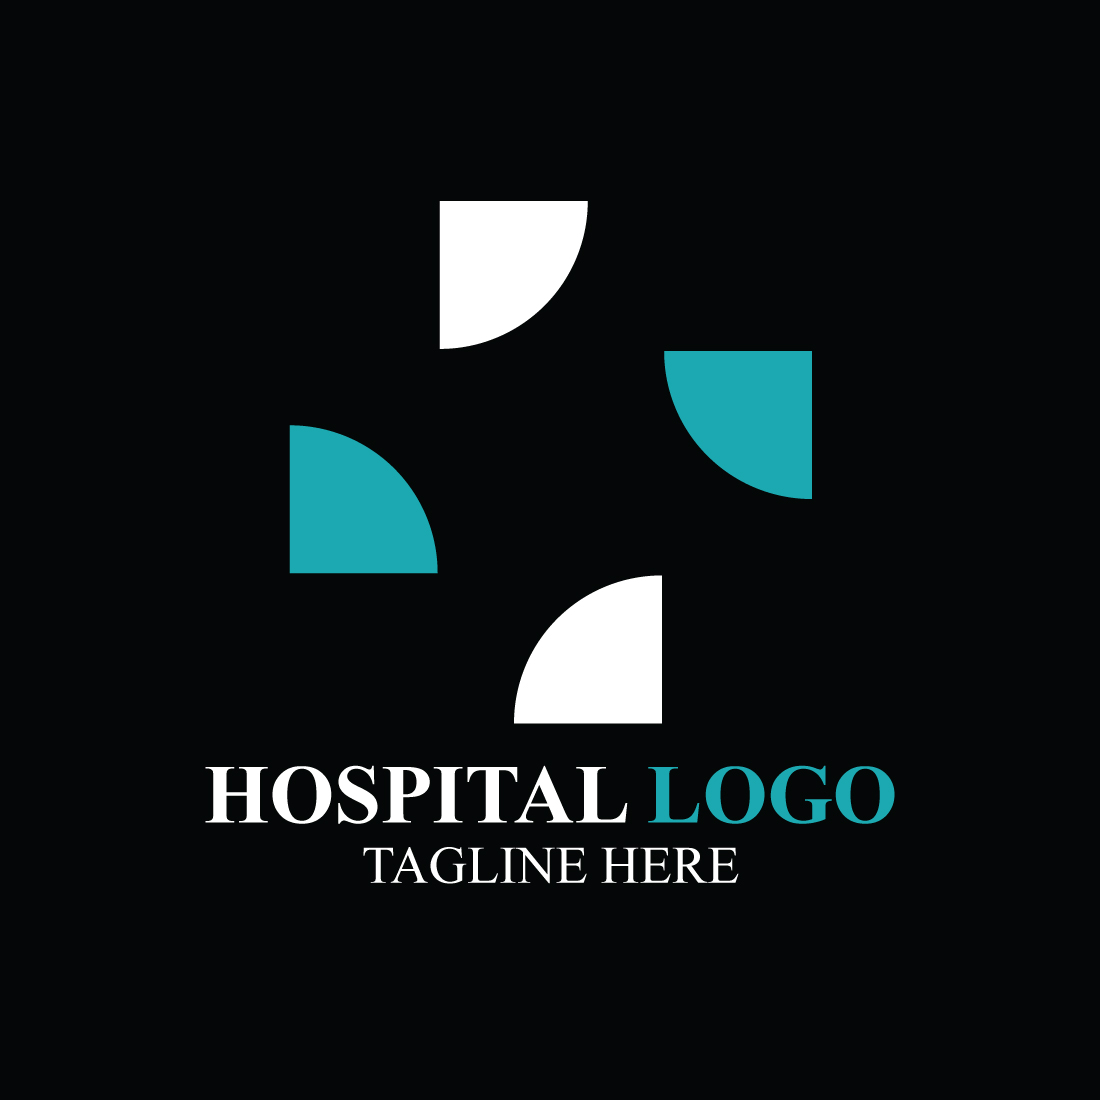 Unique Hospital Logo Design Service preview image.